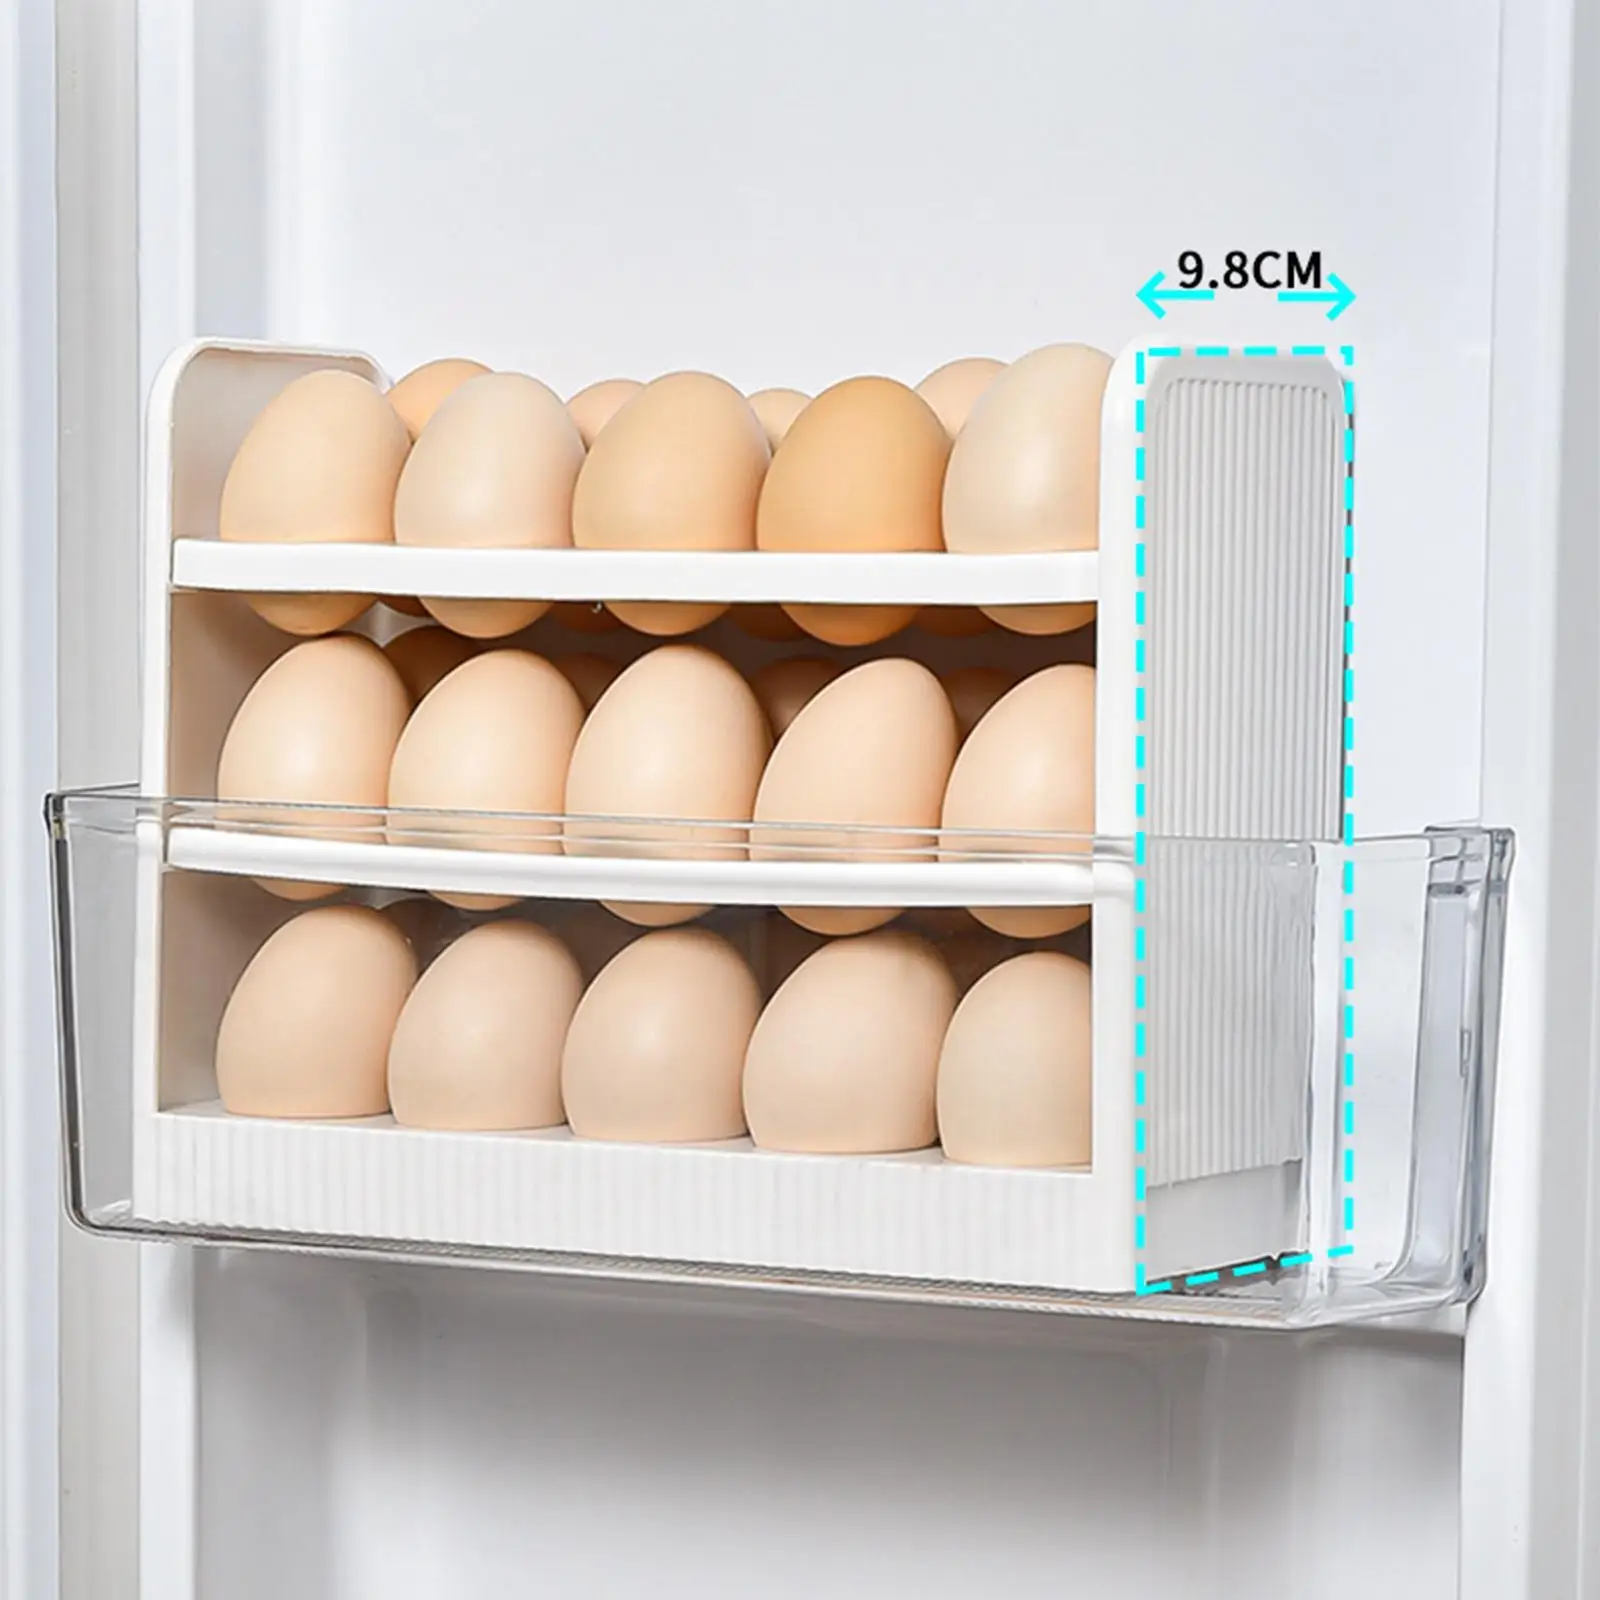 30 Grid Egg Storage Container Eggs Tray Bins Fridge Eggs Organizers Egg Holder for Kitchen Cabinet Drawer Shelf Countertop